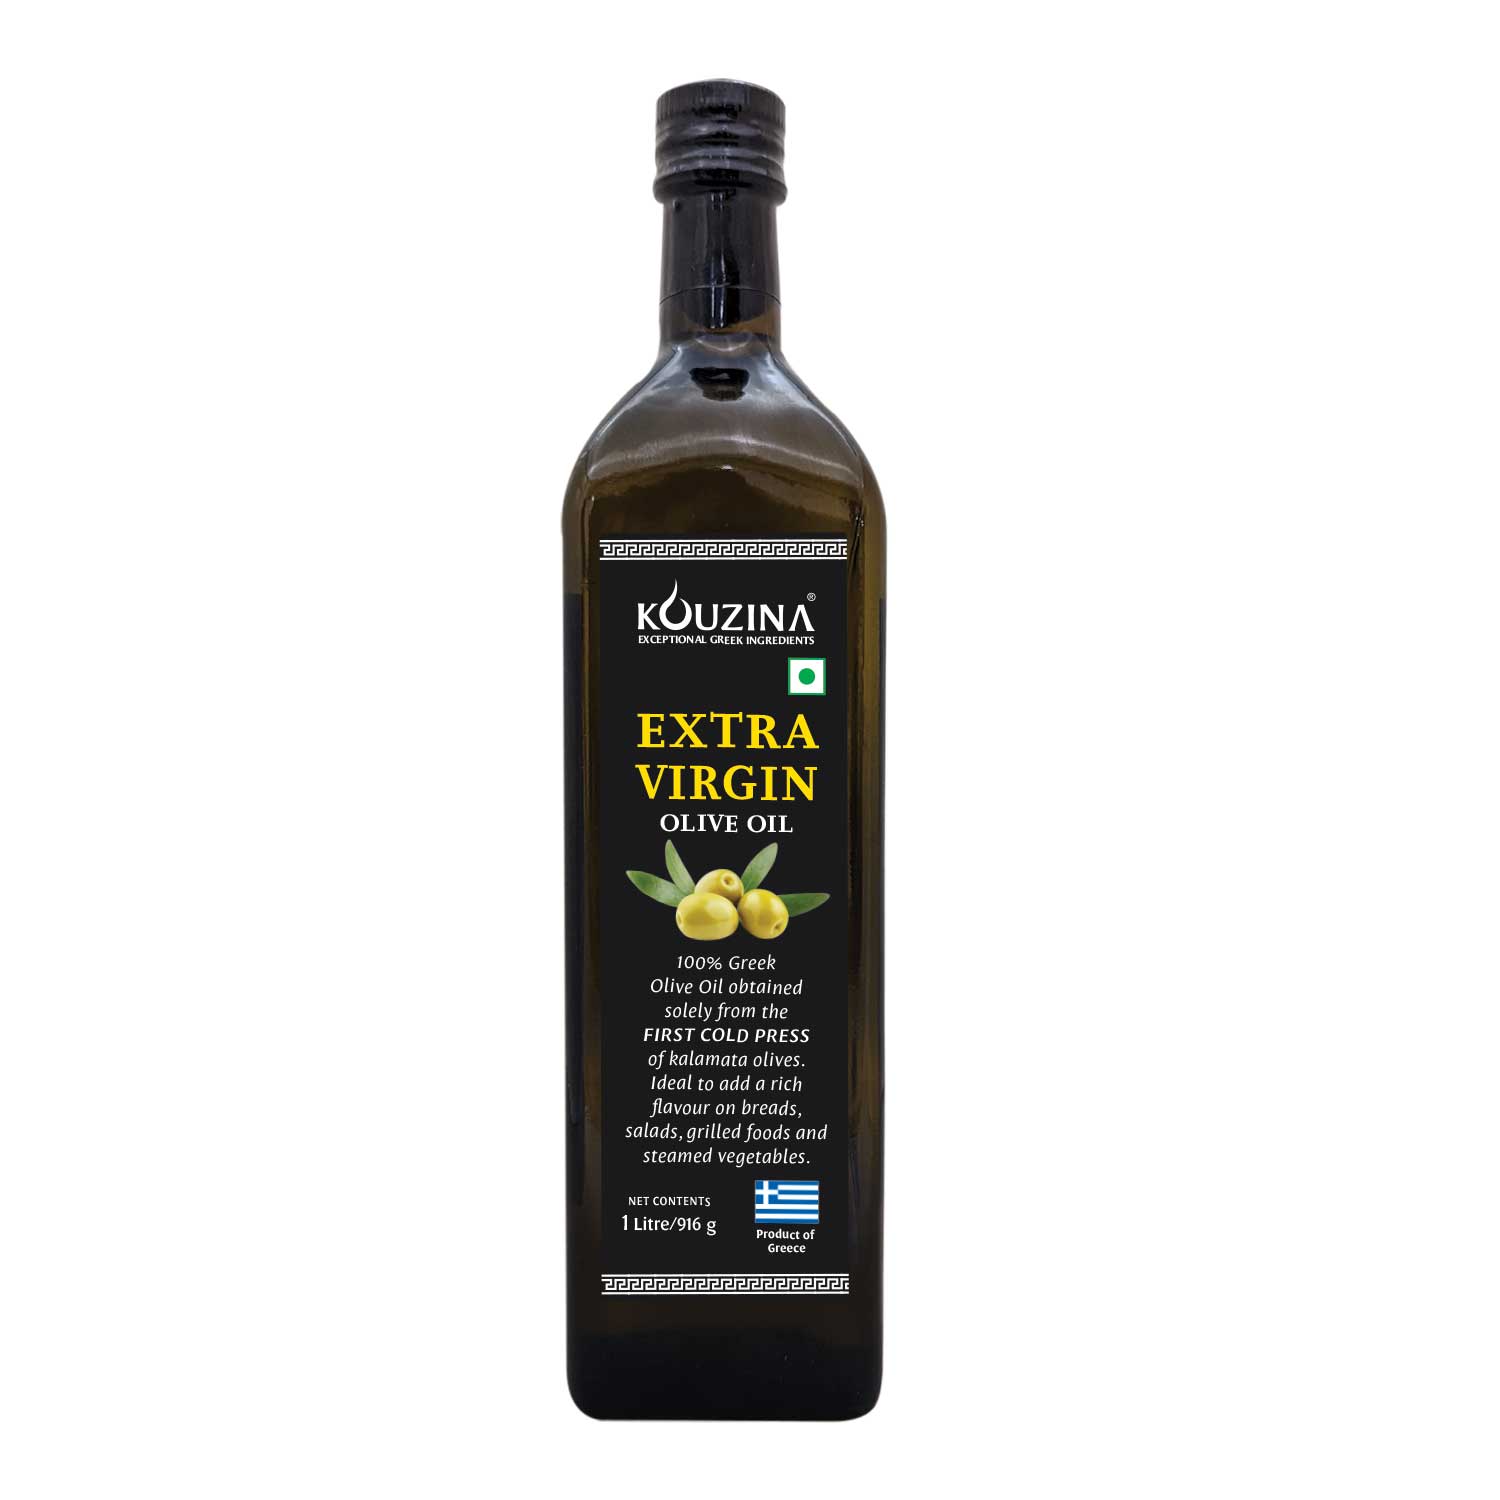 Kouzina 100% Greek Extra Virgin Olive Oil